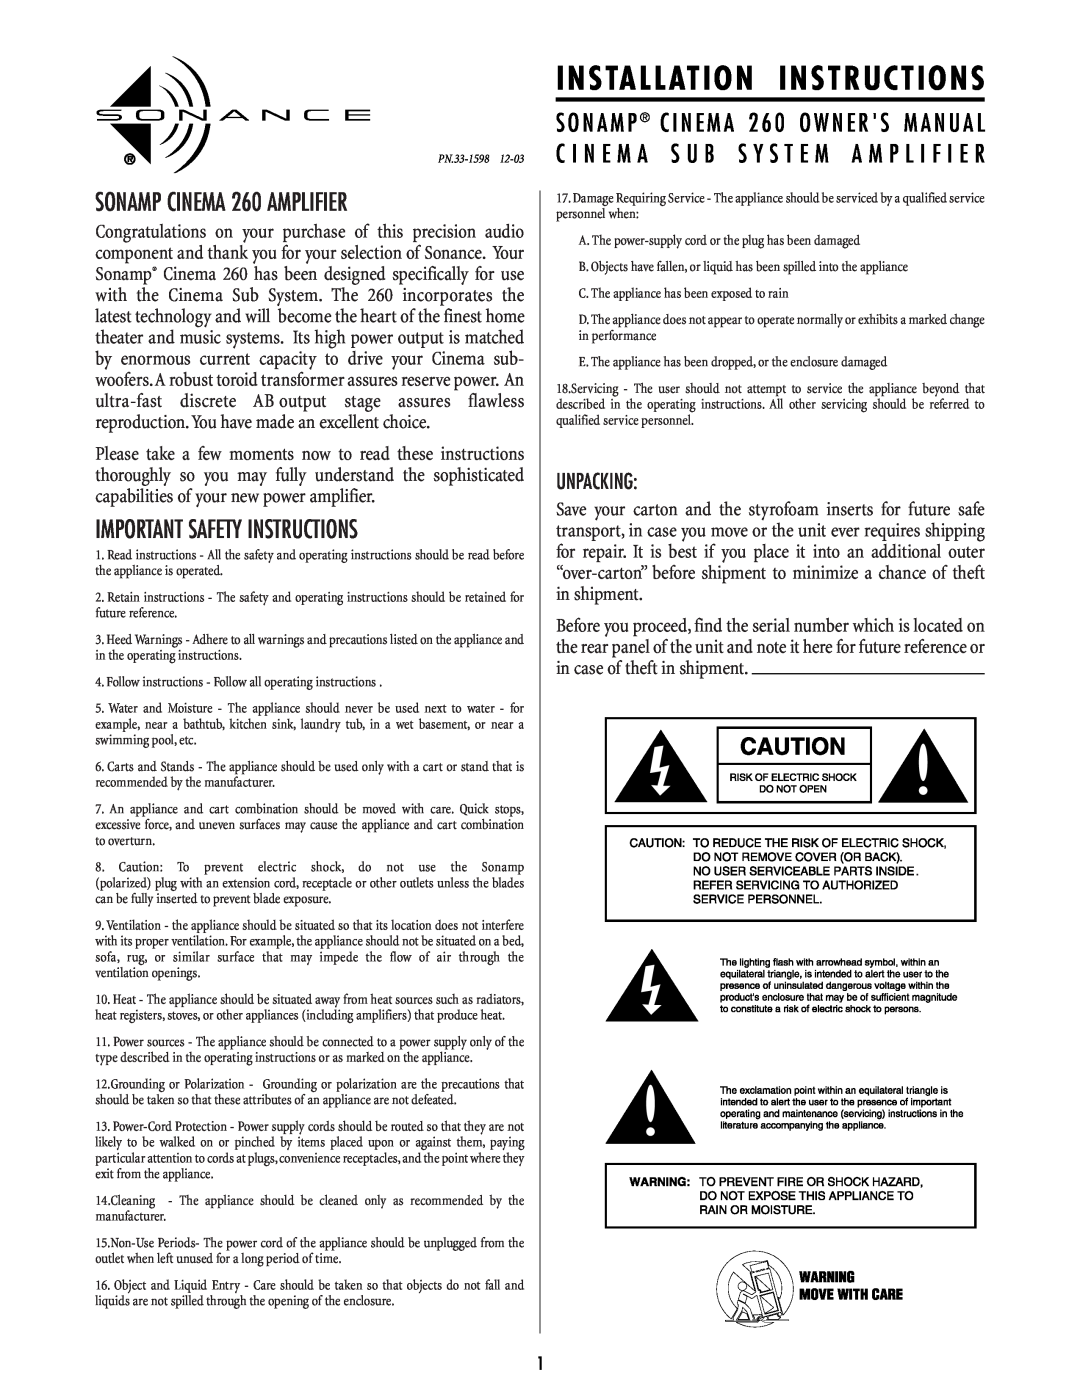 Sonance important safety instructions SONAMP CINEMA 260 AMPLIFIER, Important Safety Instructions, Unpacking 